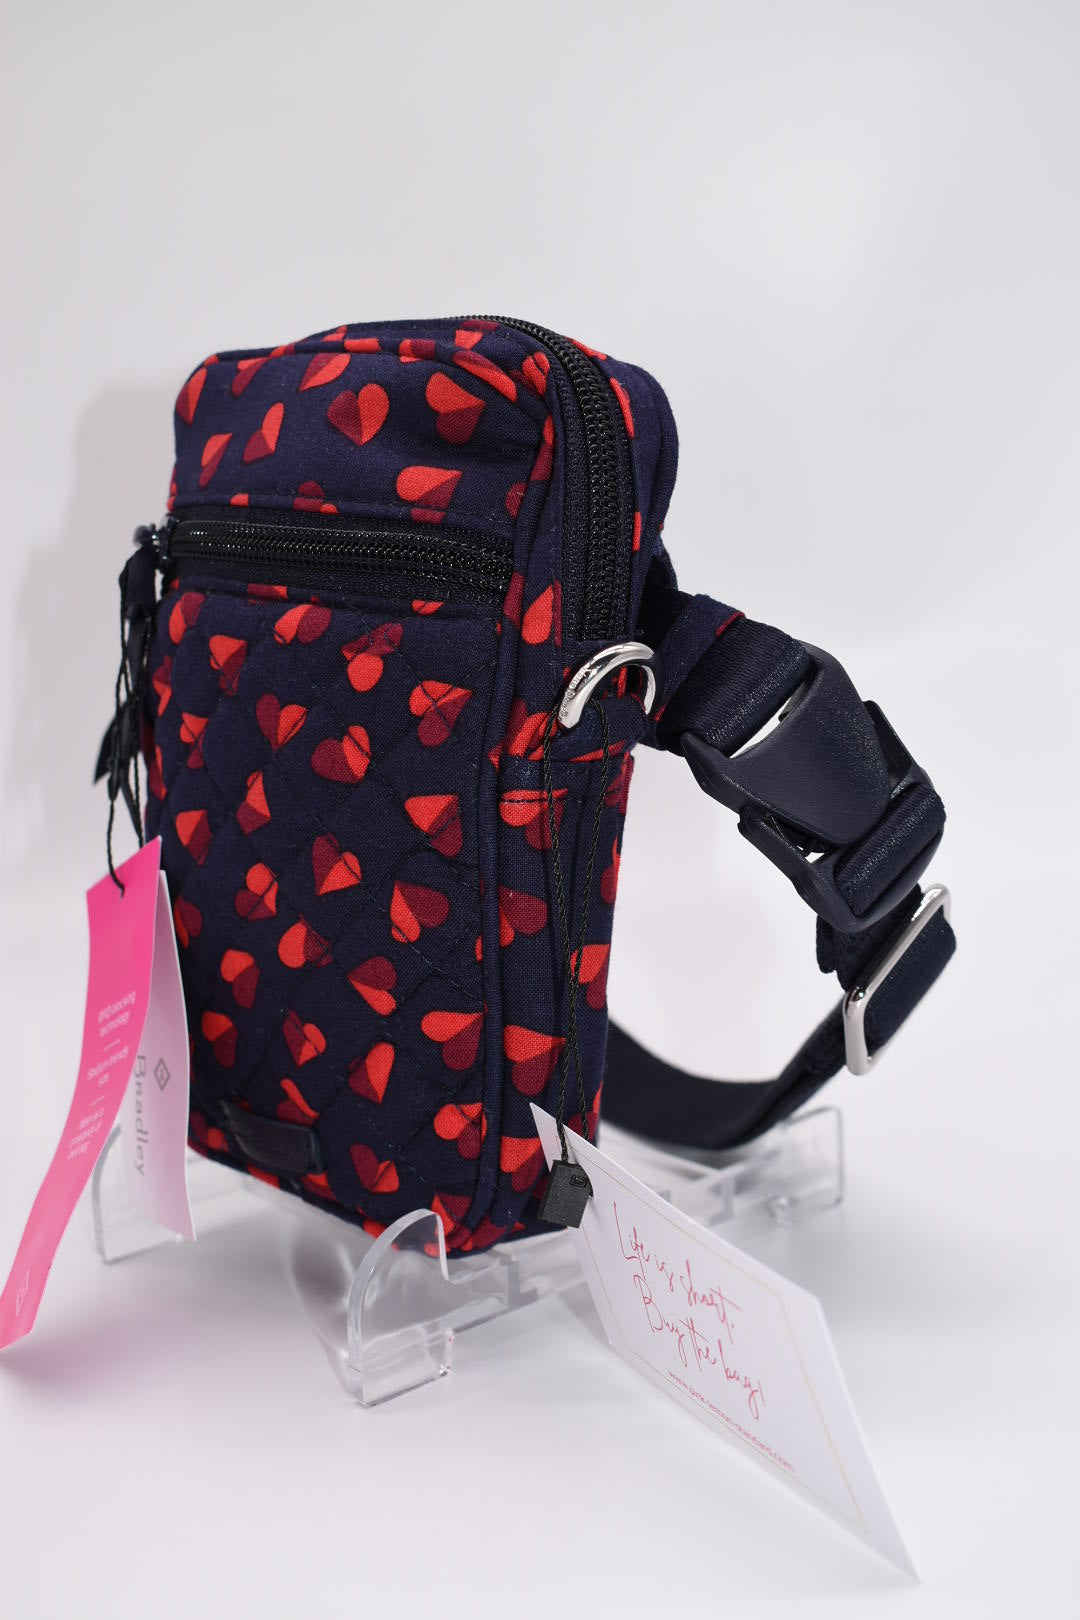 Vera Bradley RFID Convertible Crossbody Bag in Sweet Hearts